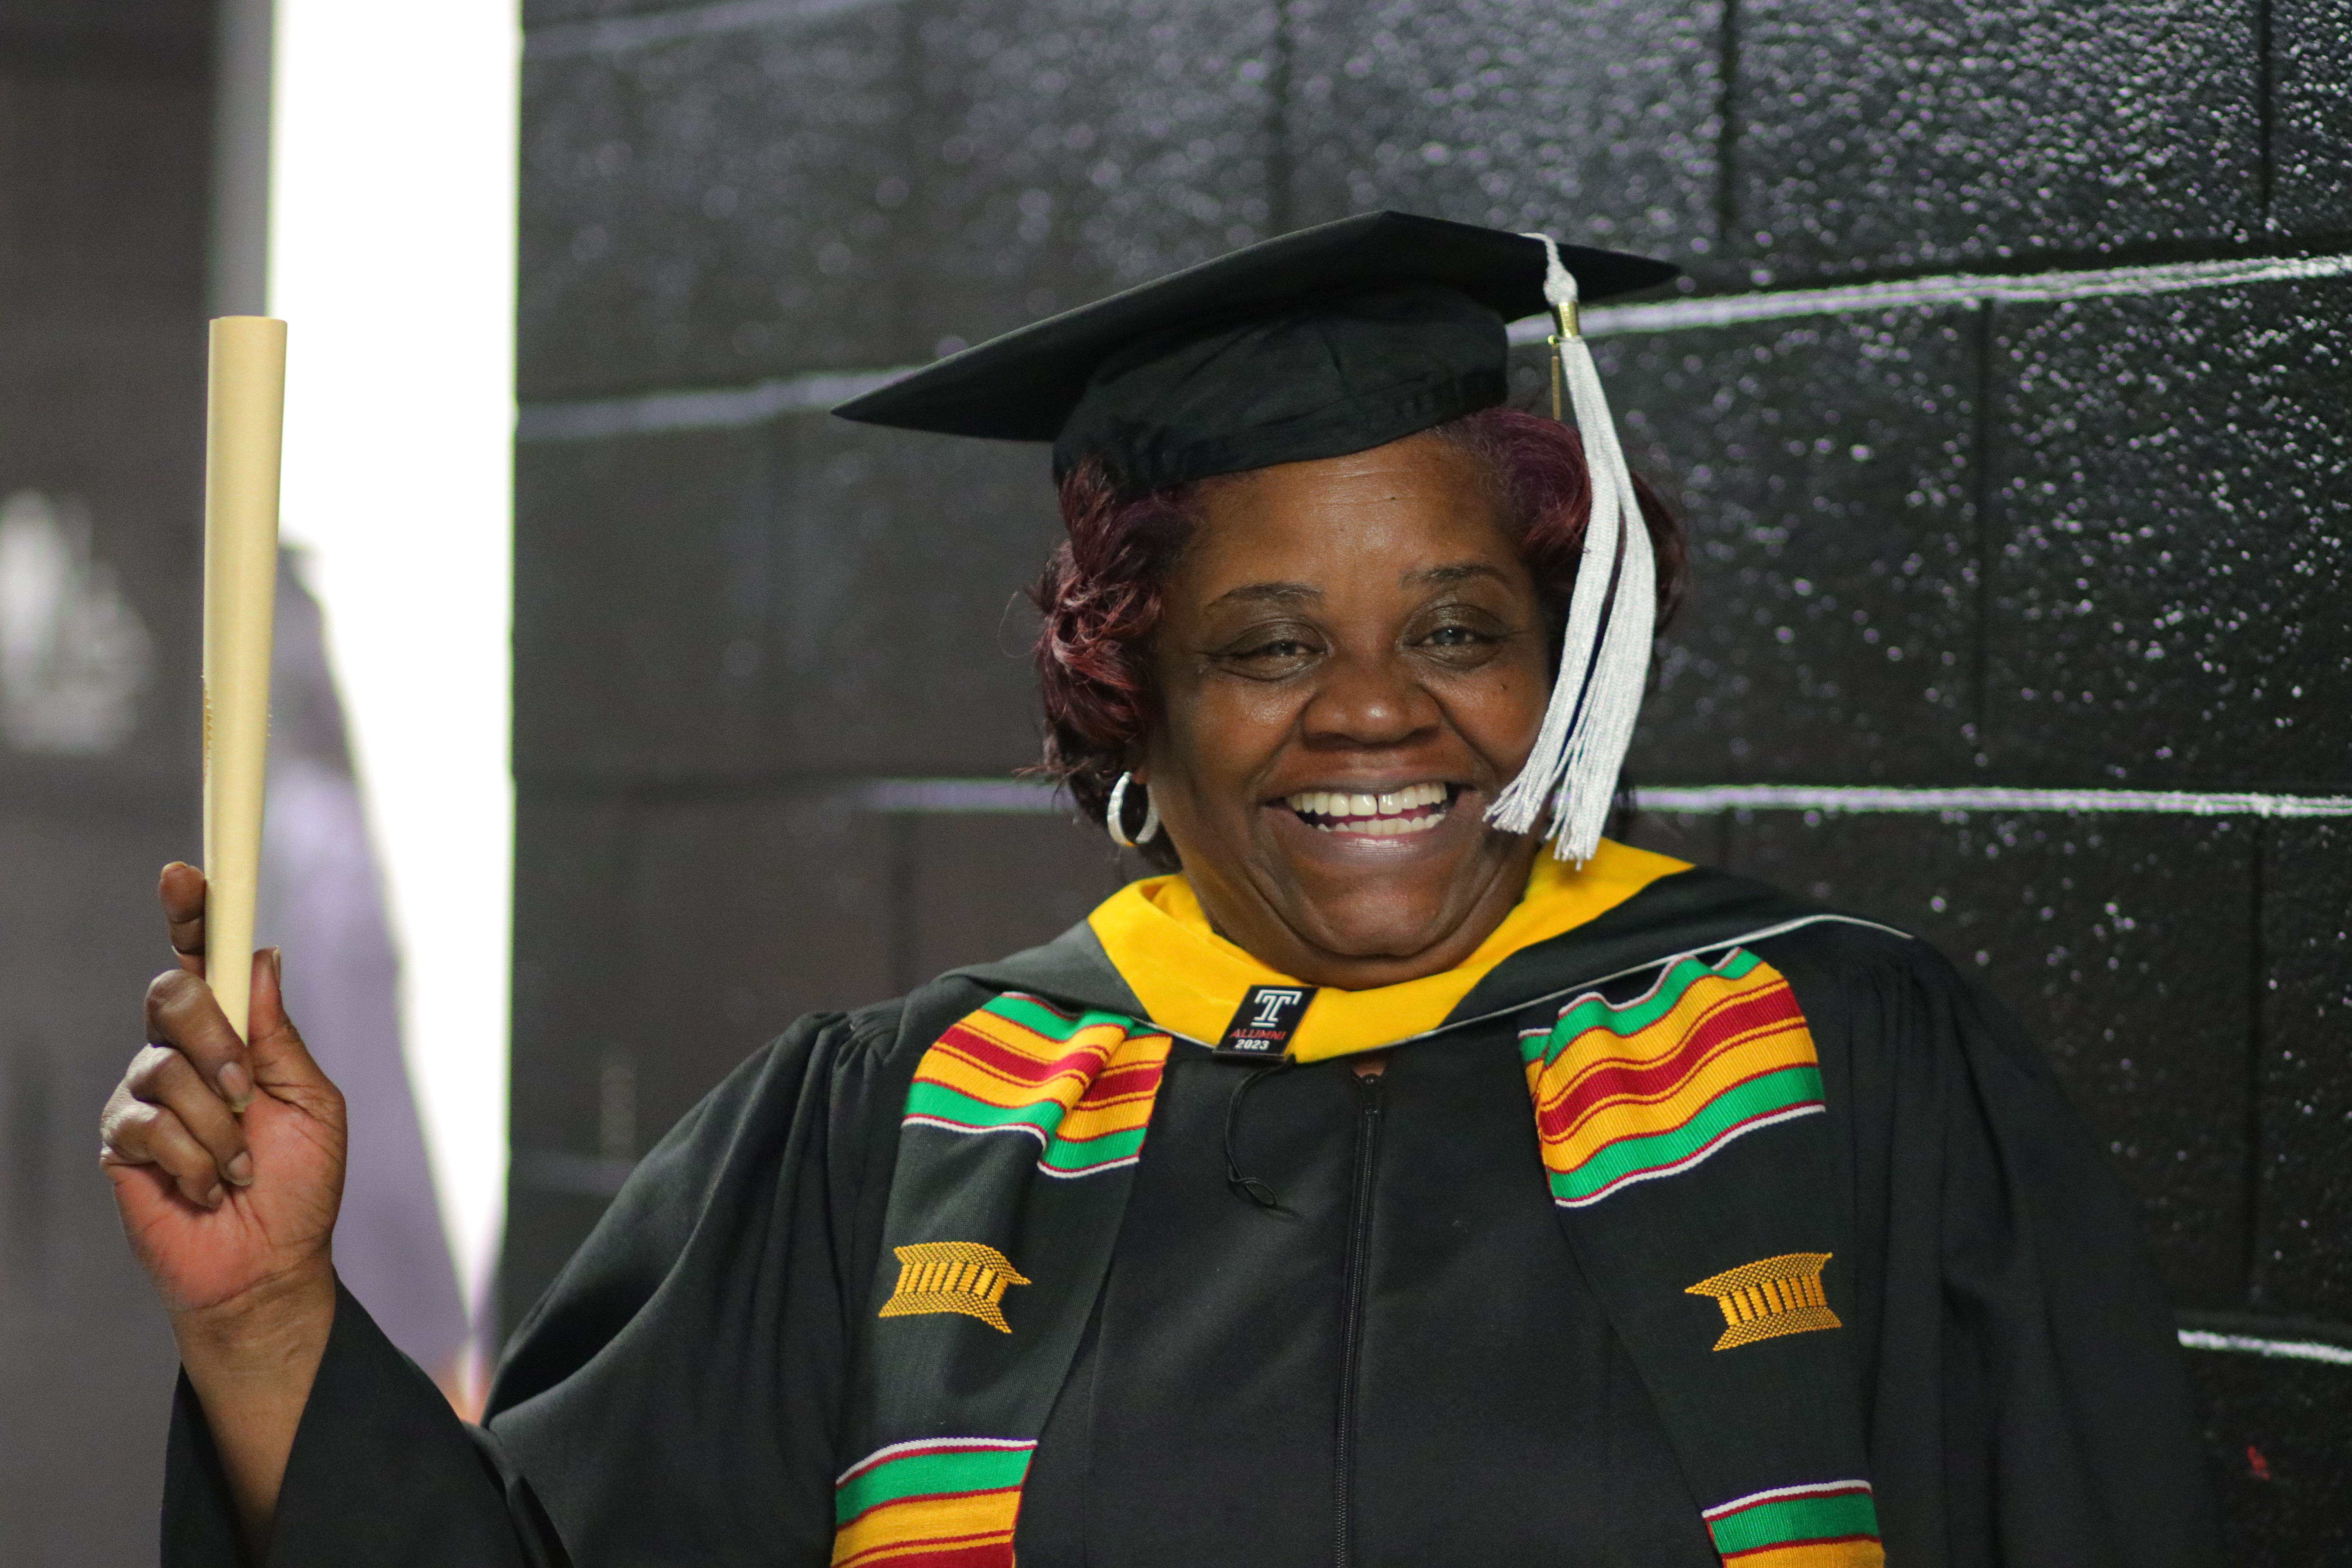 Graduate raises diploma in celebration